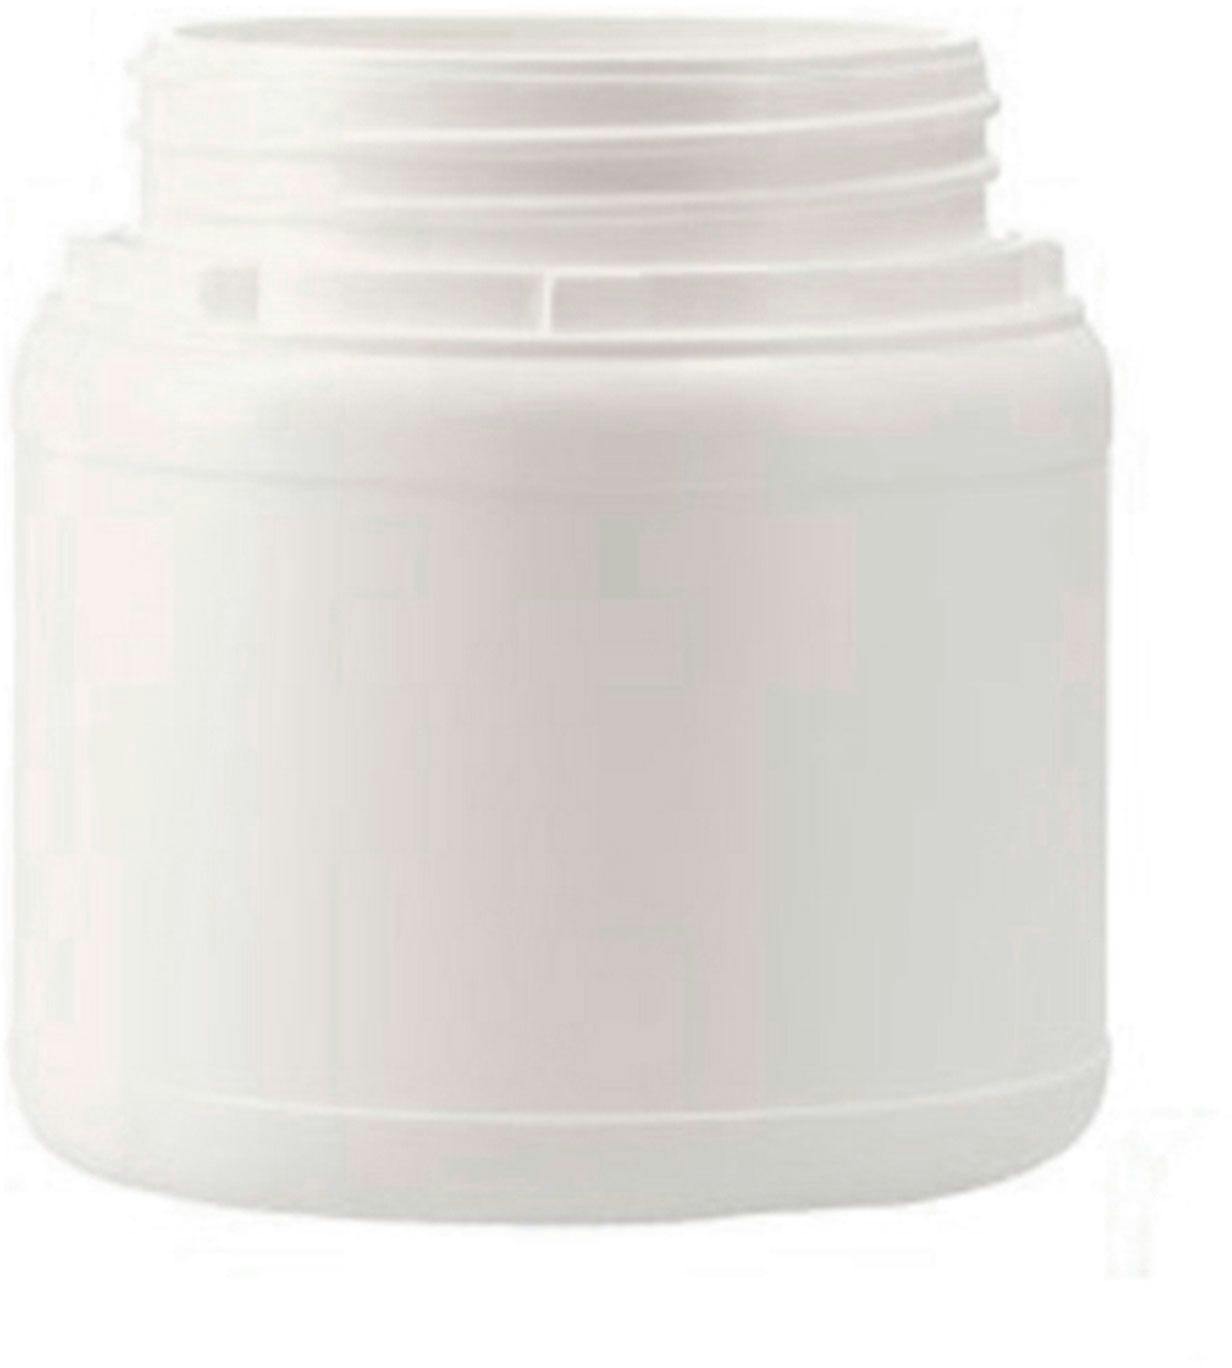 Jar HDPE 500 ml white J-CAP40 Precinto D80